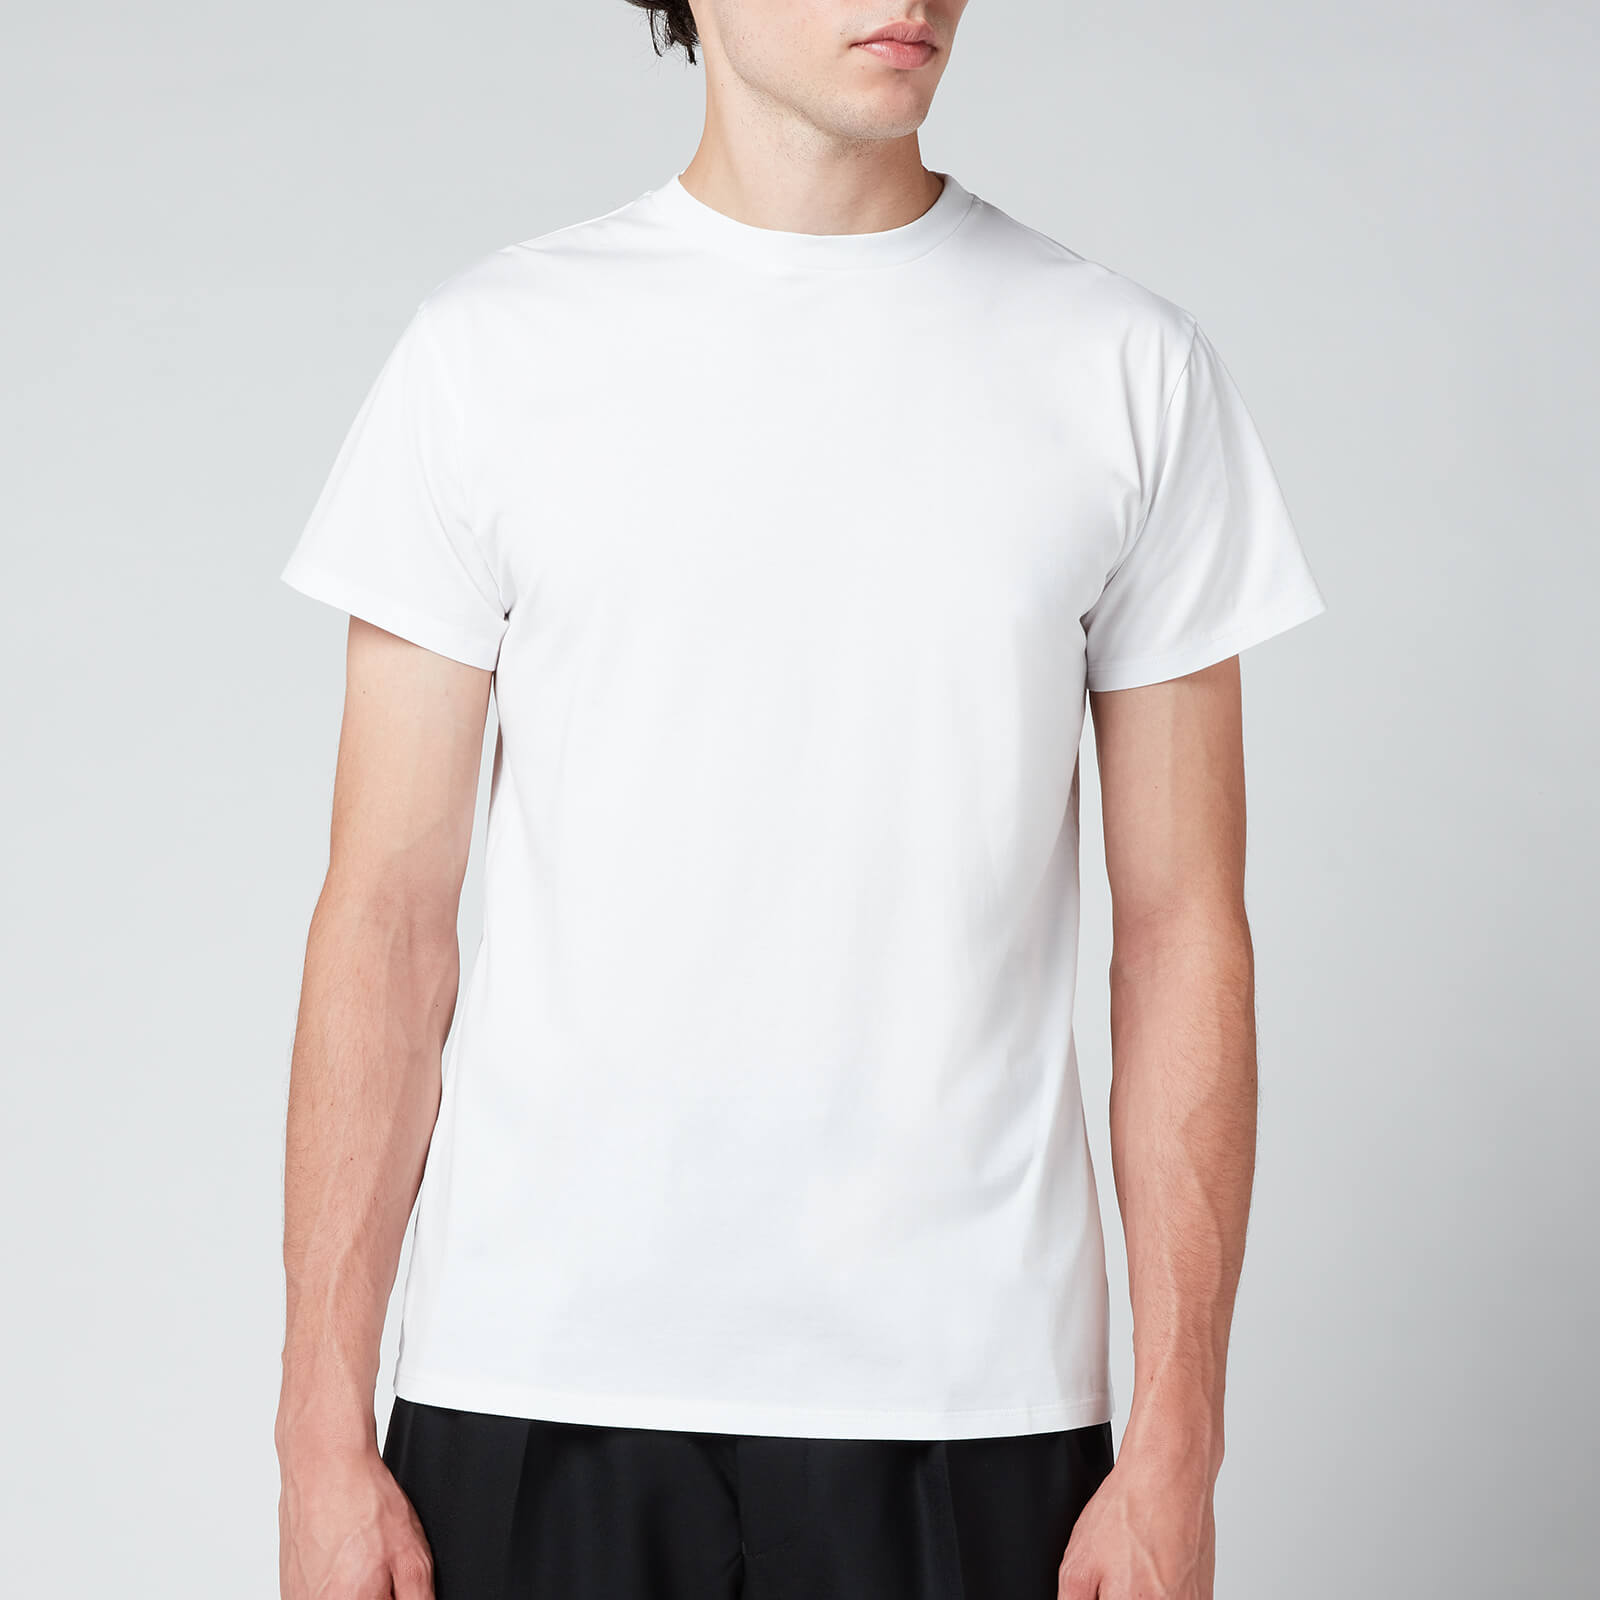 Maison Margiela Men's Classic Jersey T-Shirt - White - S